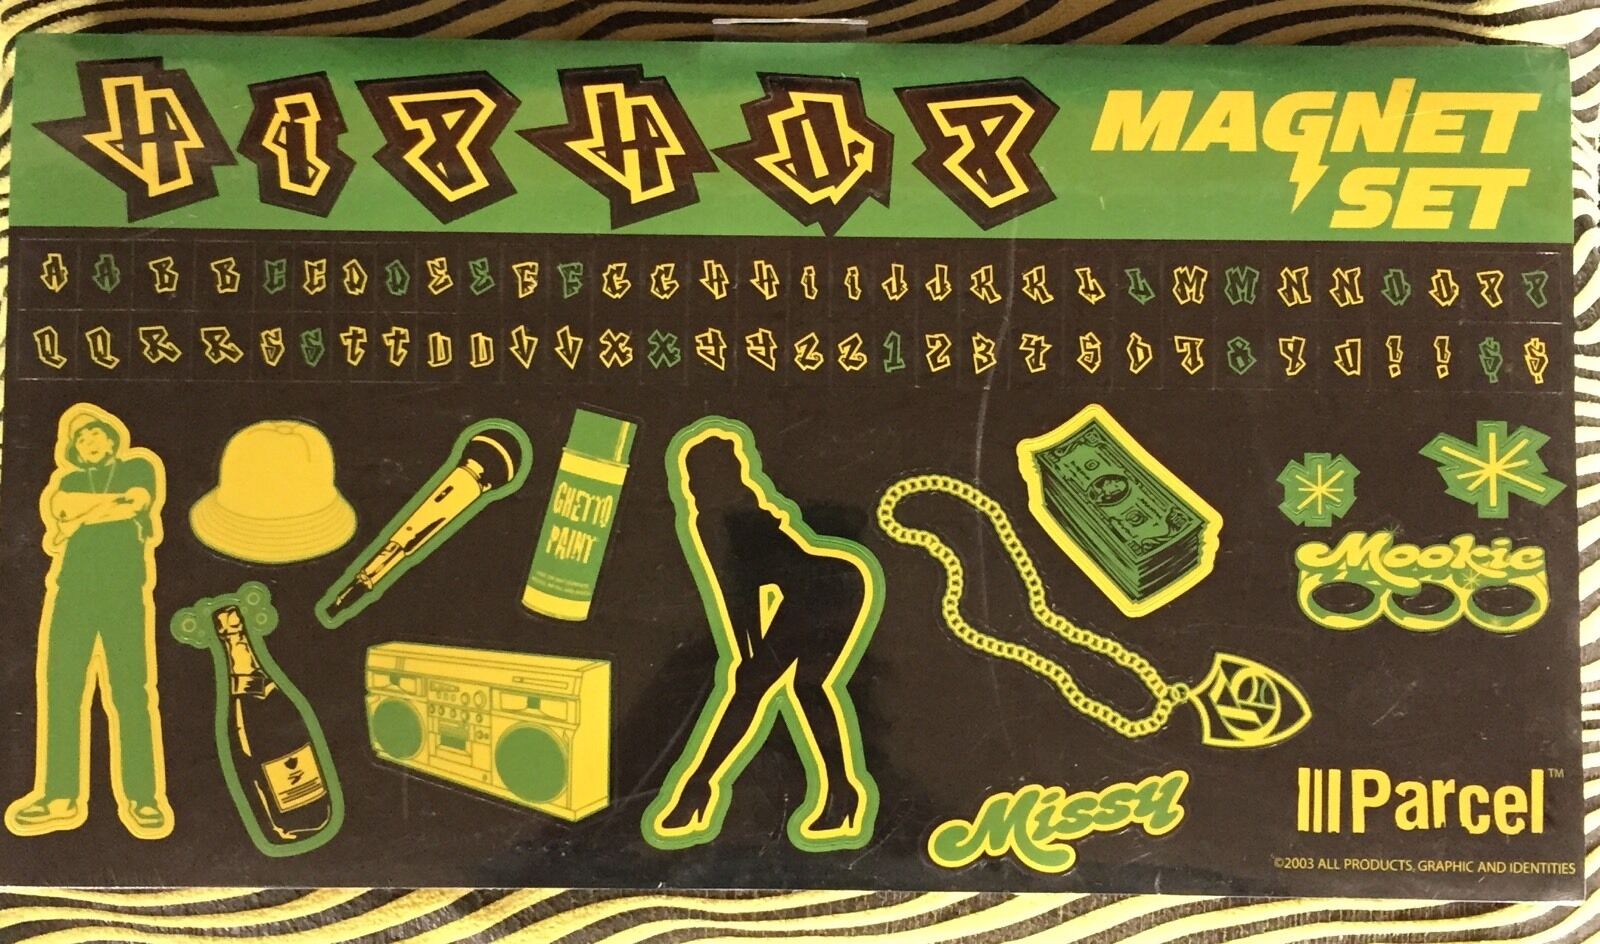 Wild HIP HOP Throw Back Rap Music Rock Retro Magnet Set 80+ Magnets